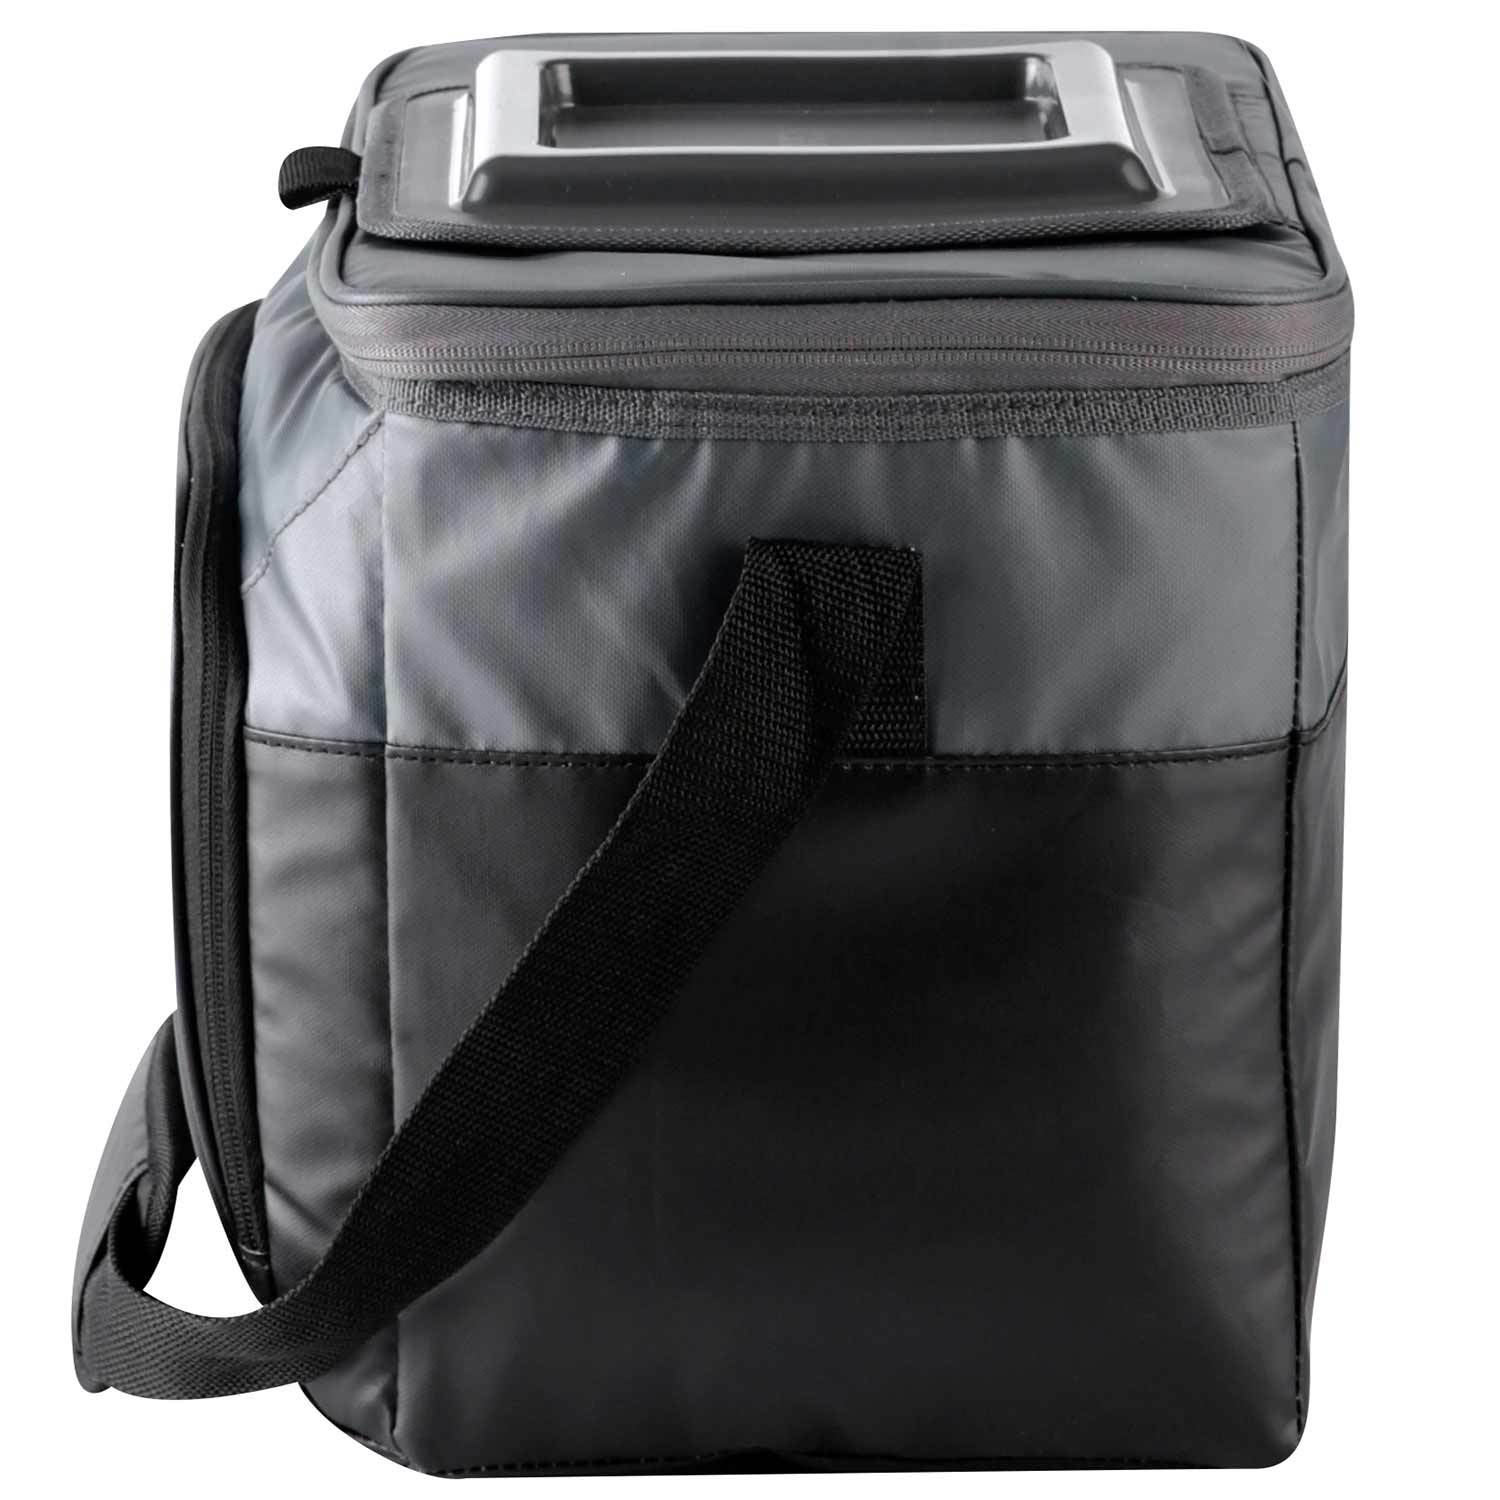 Igloo Cooler Bag Seadrft Gry 64564